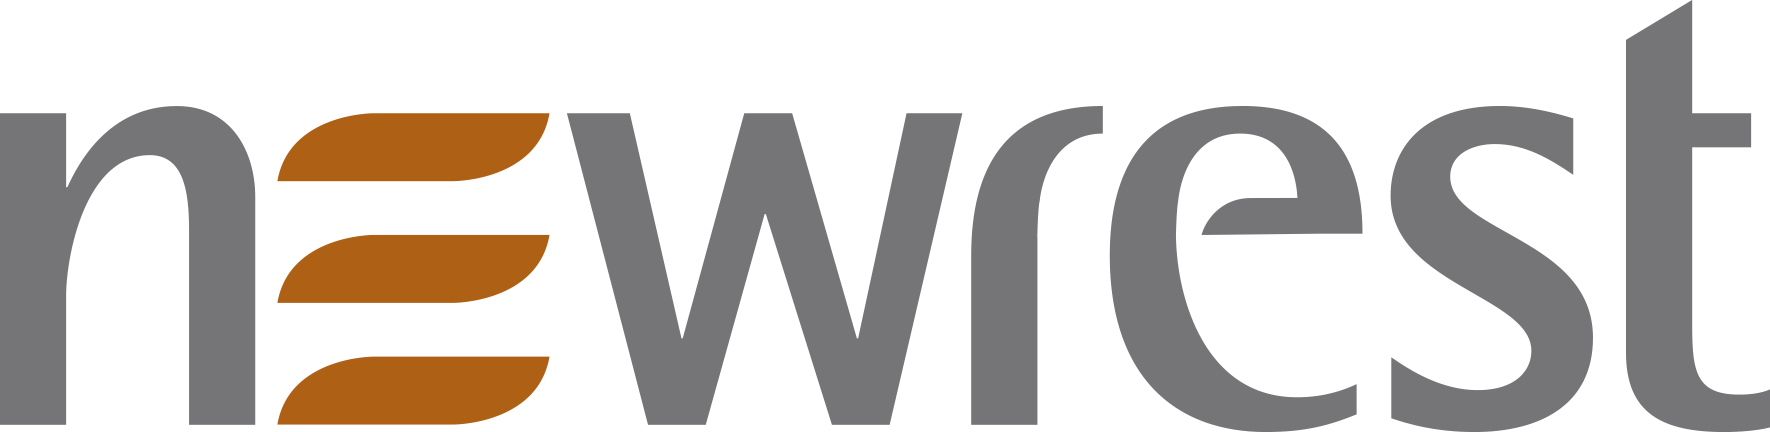 NRA Services GmbH logo